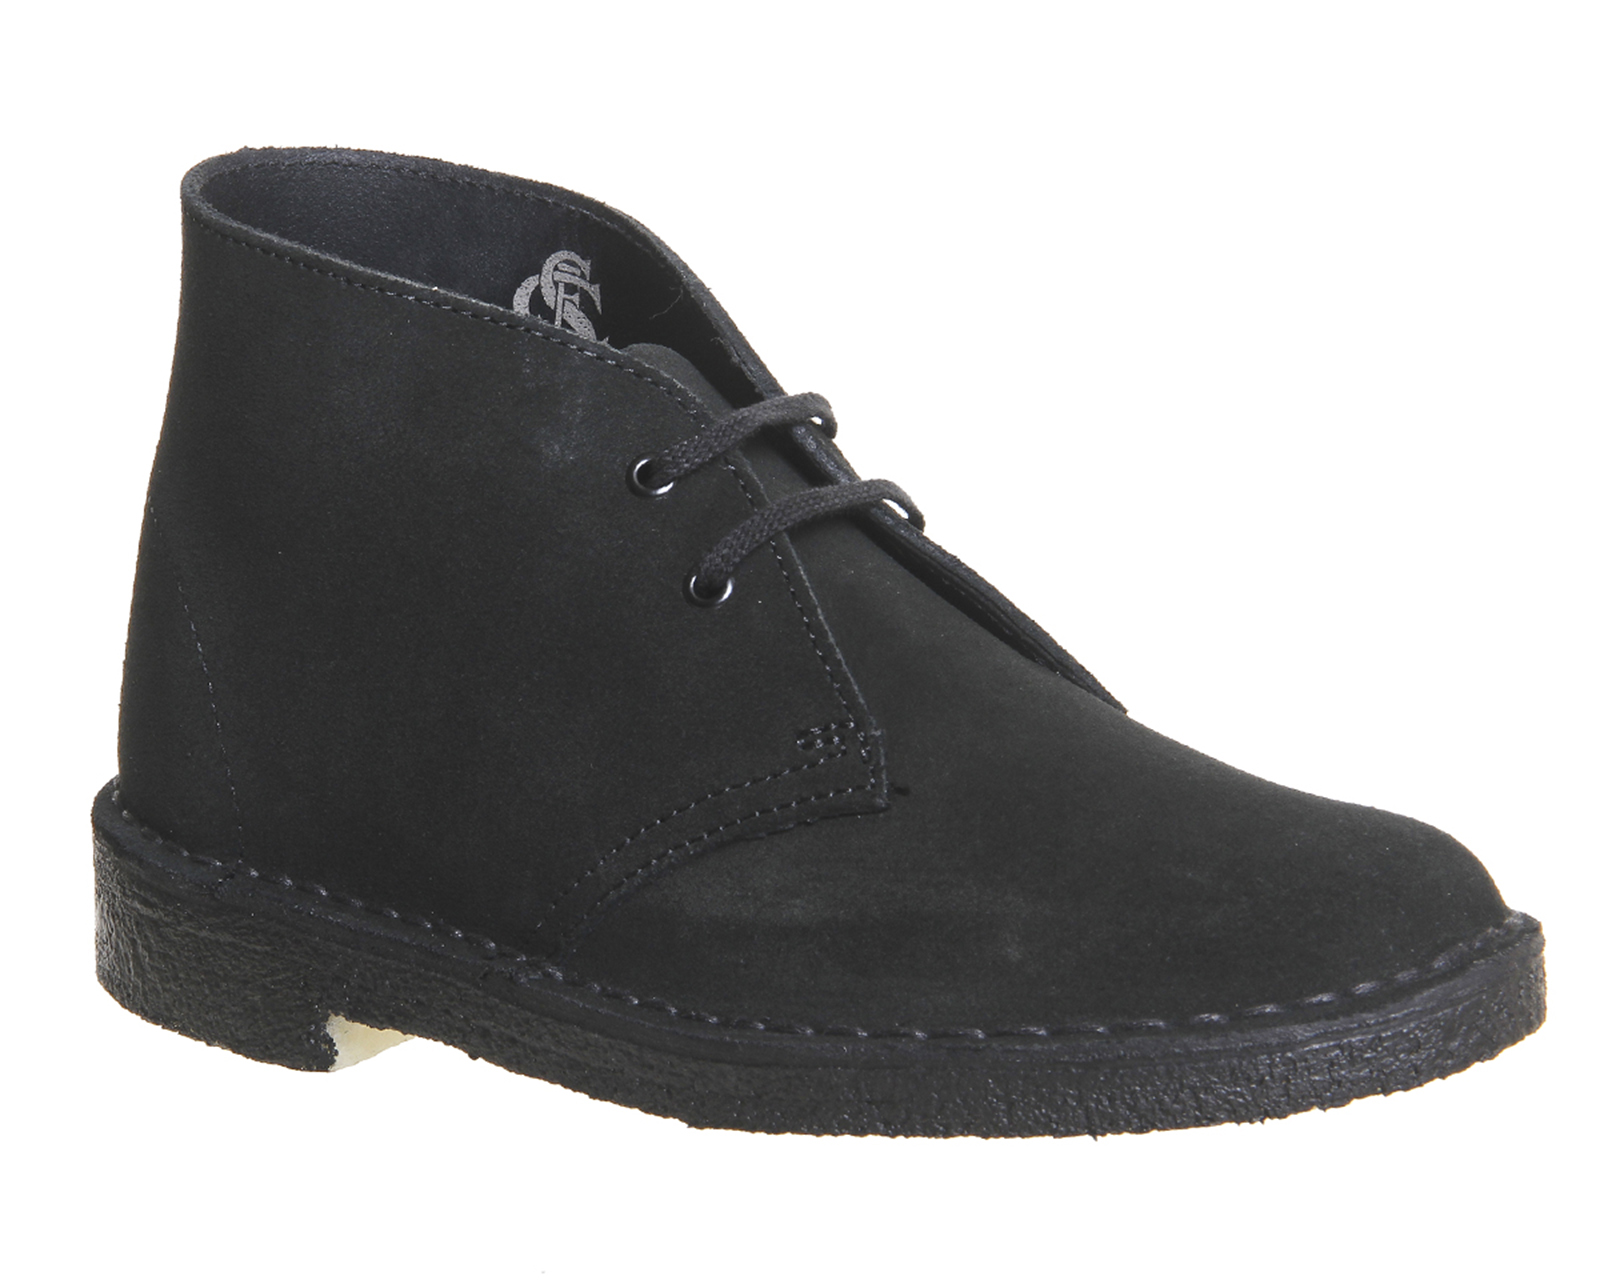 clarks originals black suede desert boots Shop Clothing & Shoes Online